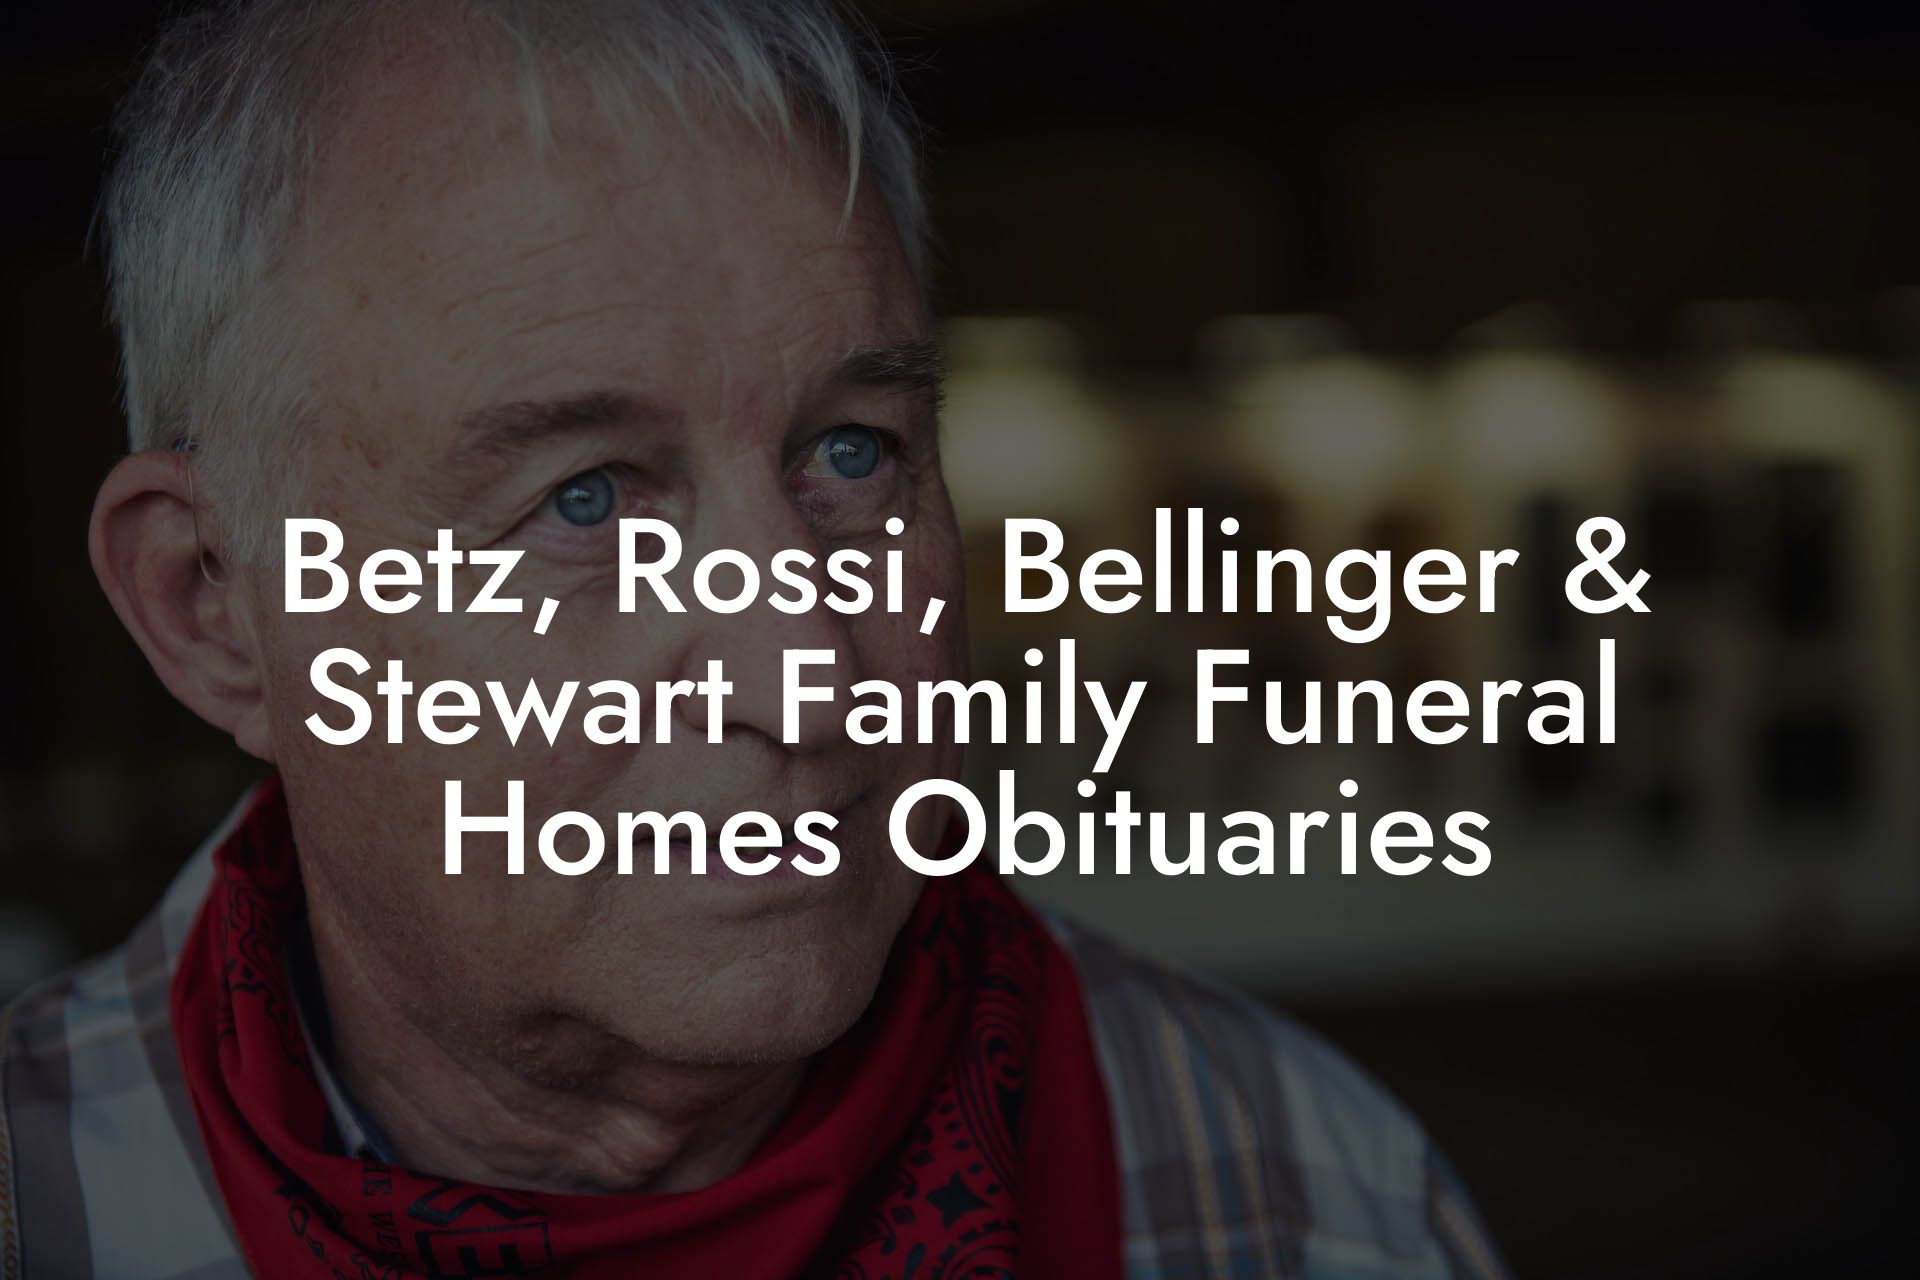 Betz, Rossi, Bellinger & Stewart Family Funeral Homes Obituaries